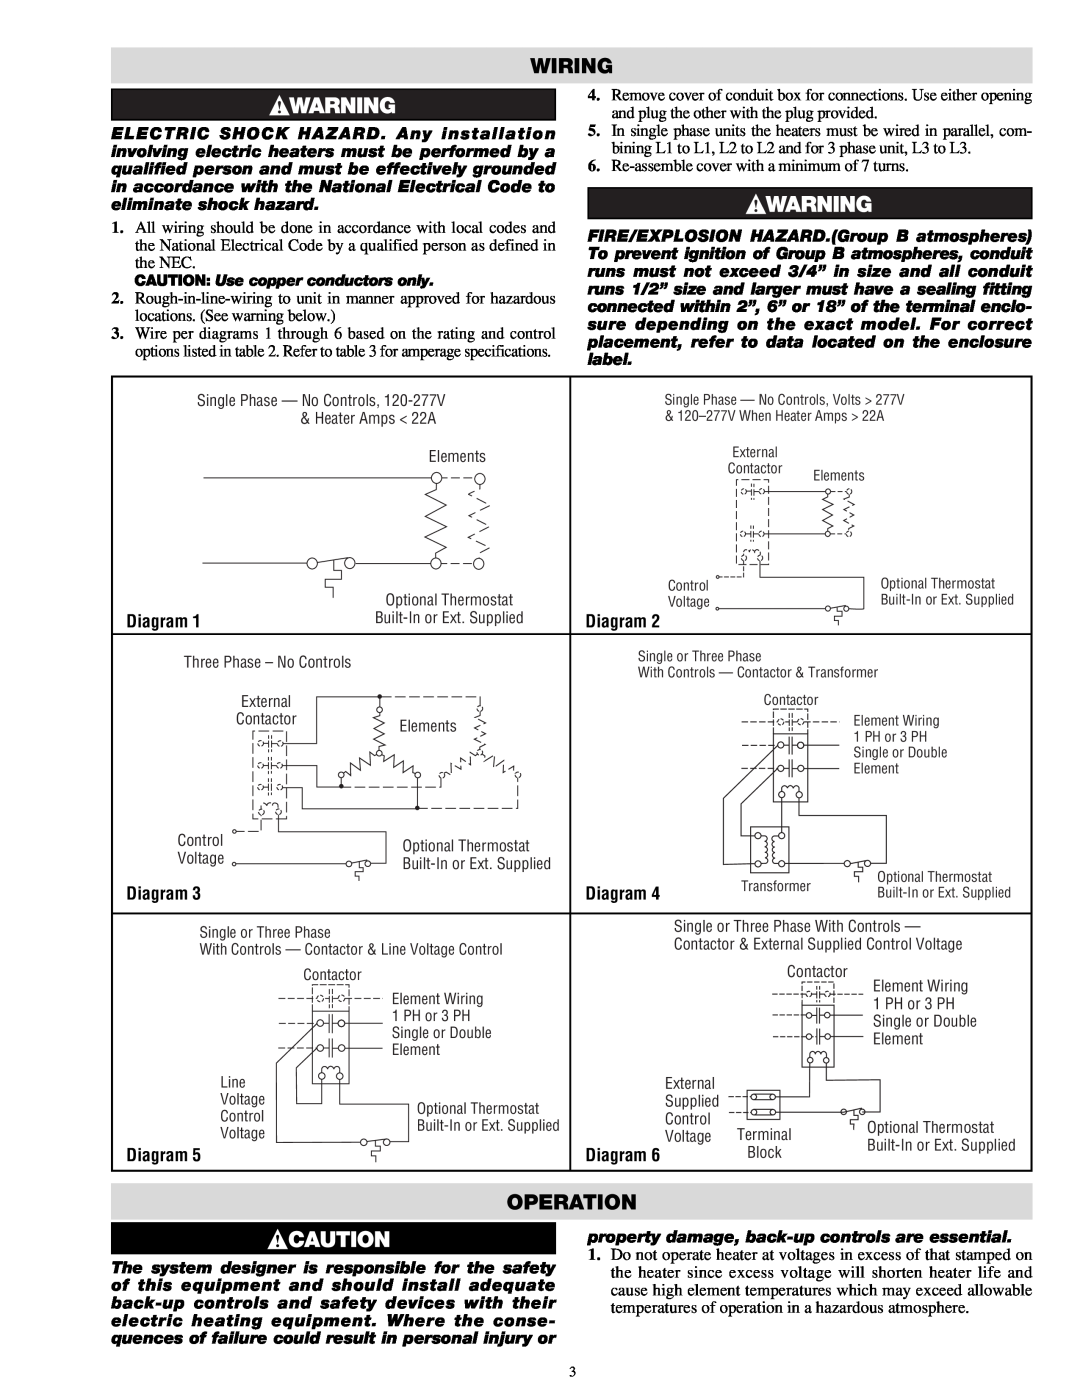 Chromalox CVEP-C installation instructions Wiring, Operation, Diagram 